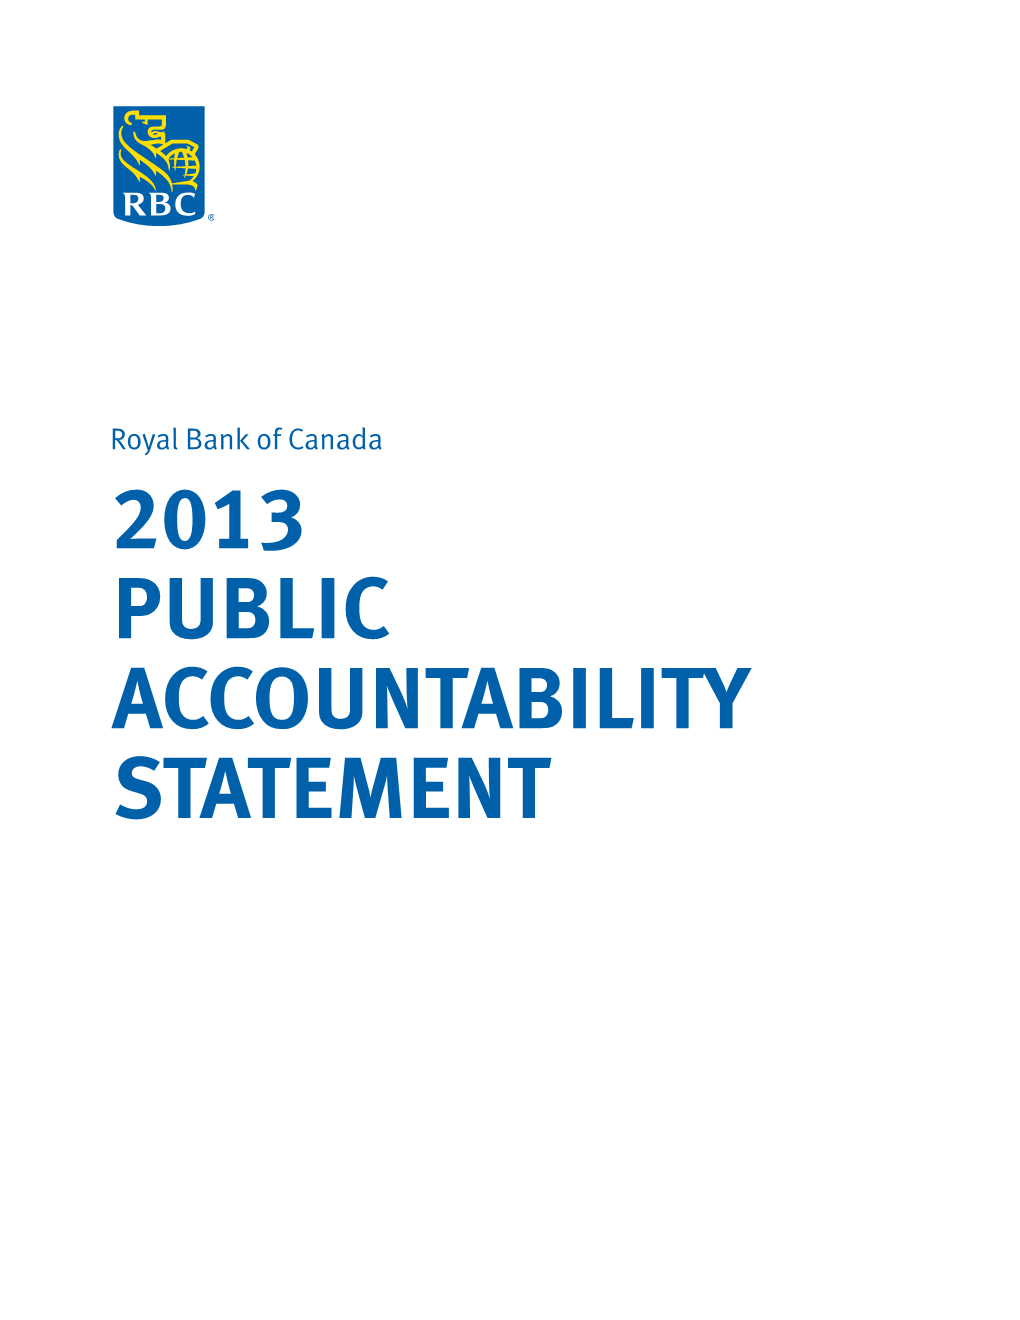 2013 PUBLIC ACCOUNTABILITY STATEMENT Royal Bank of Canada 2013 PUBLIC ACCOUNTABILITY STATEMENT